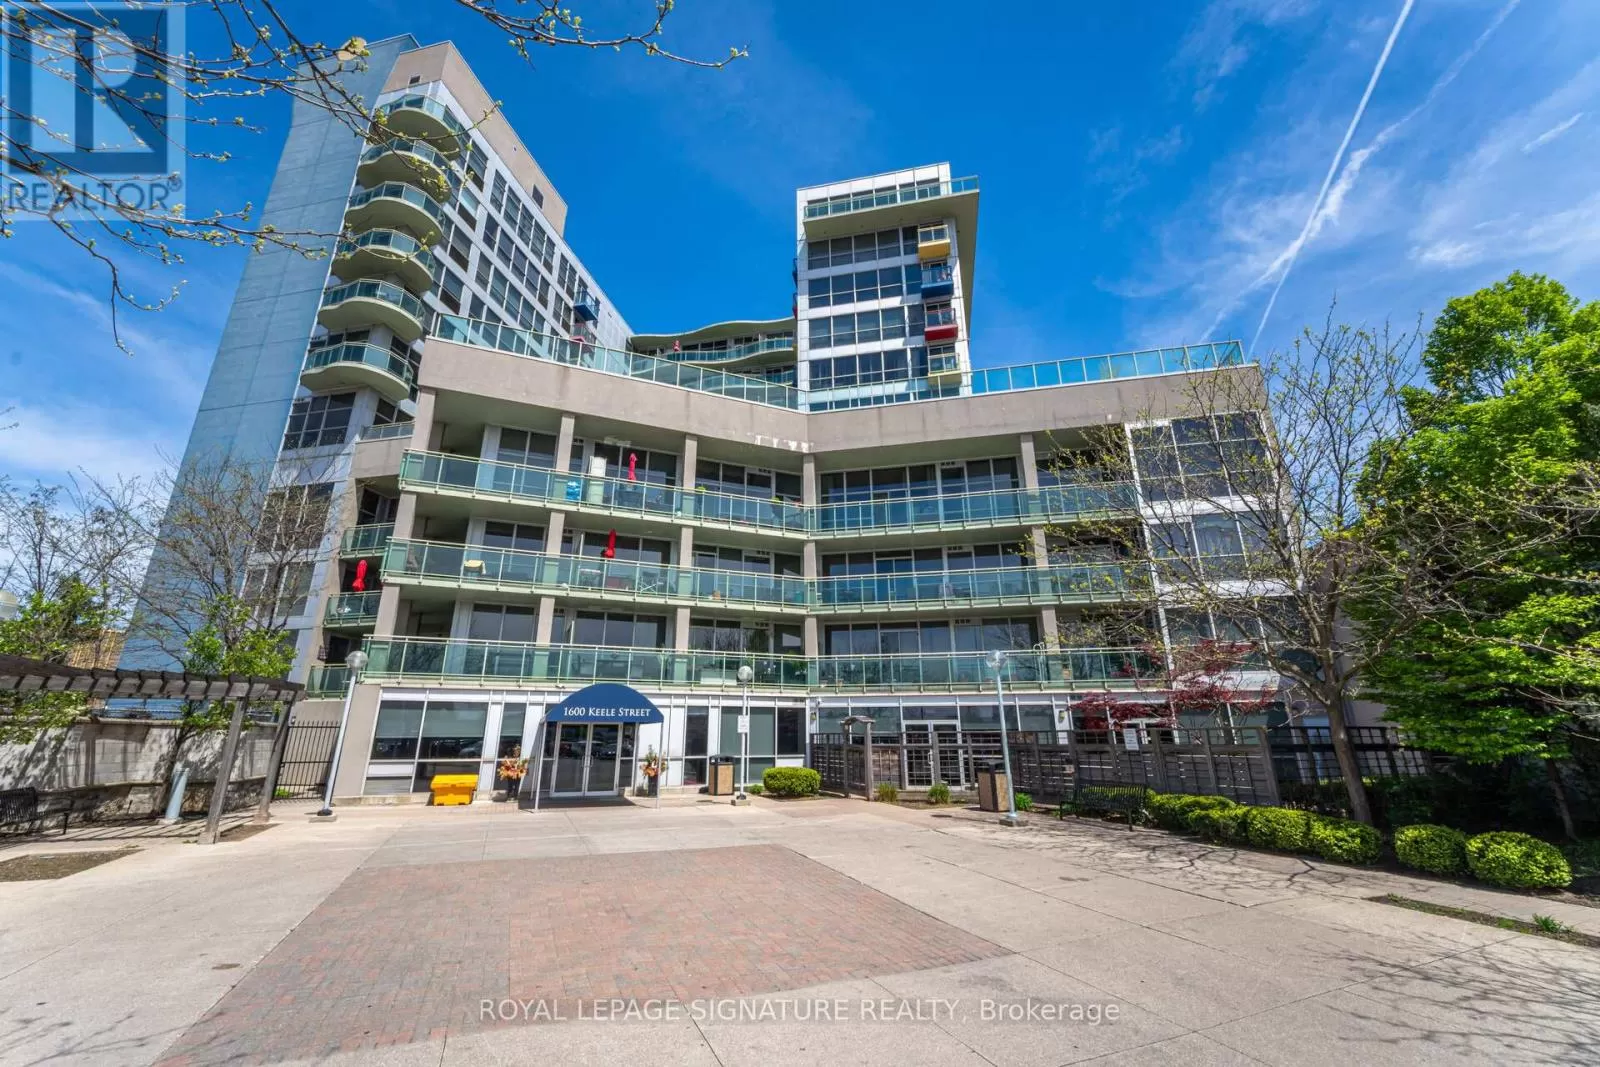 Apartment for rent: 201 - 1600 Keele Street, Toronto, Ontario M5H 5T5